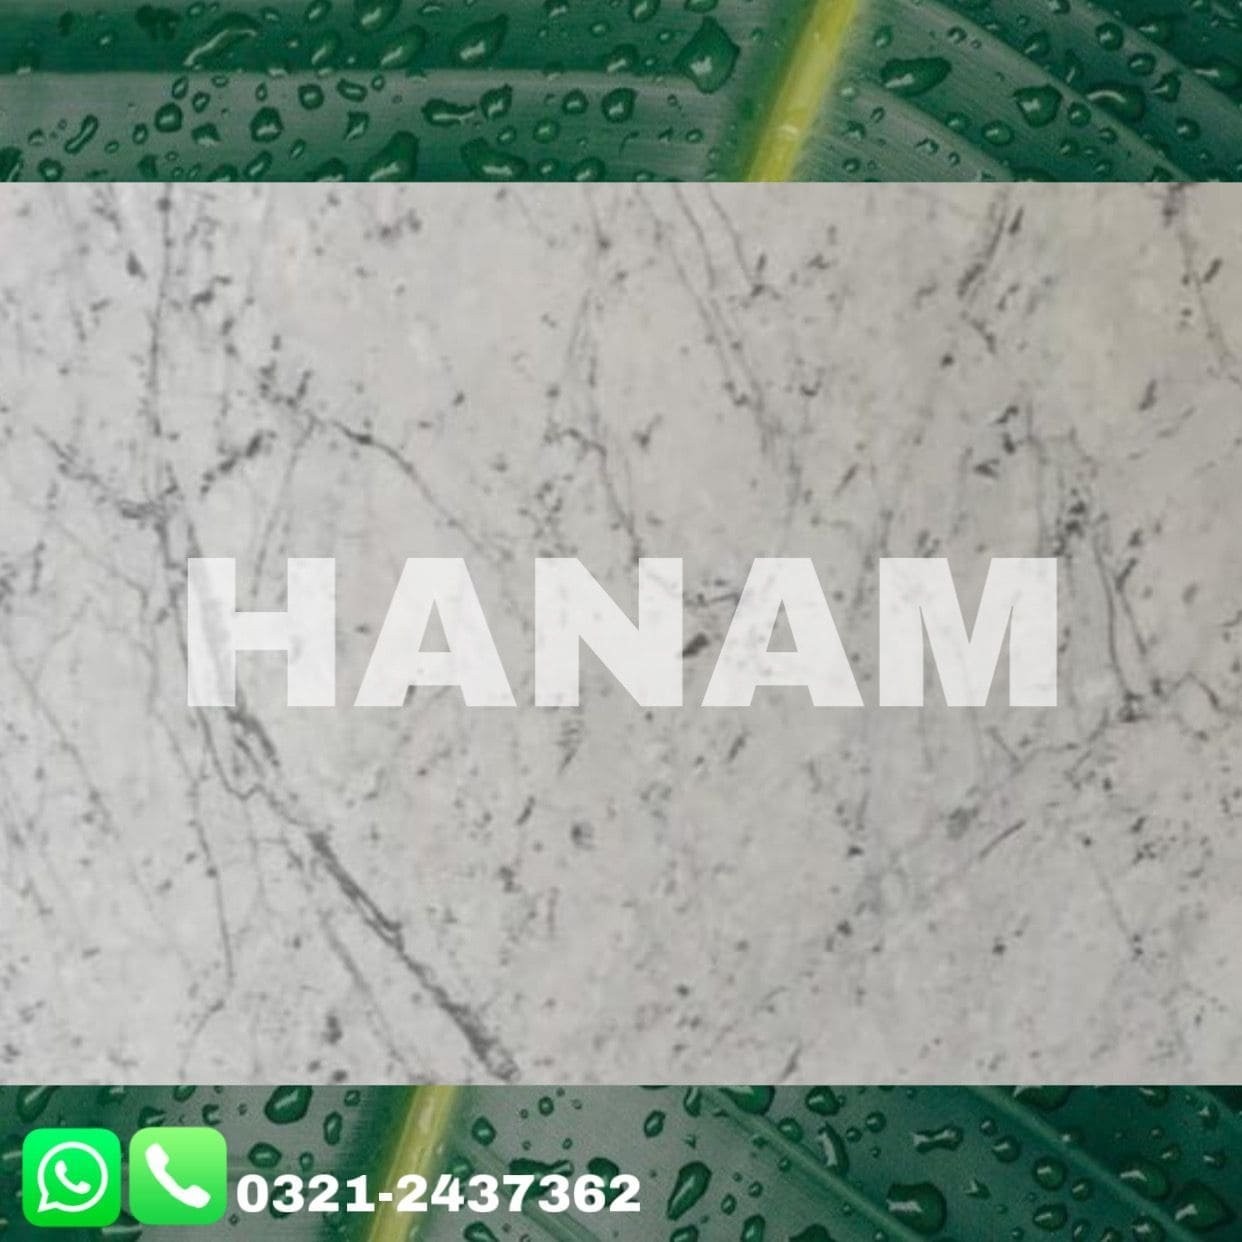 carrara-white-marble-pakistan-0321-2437362-big-12